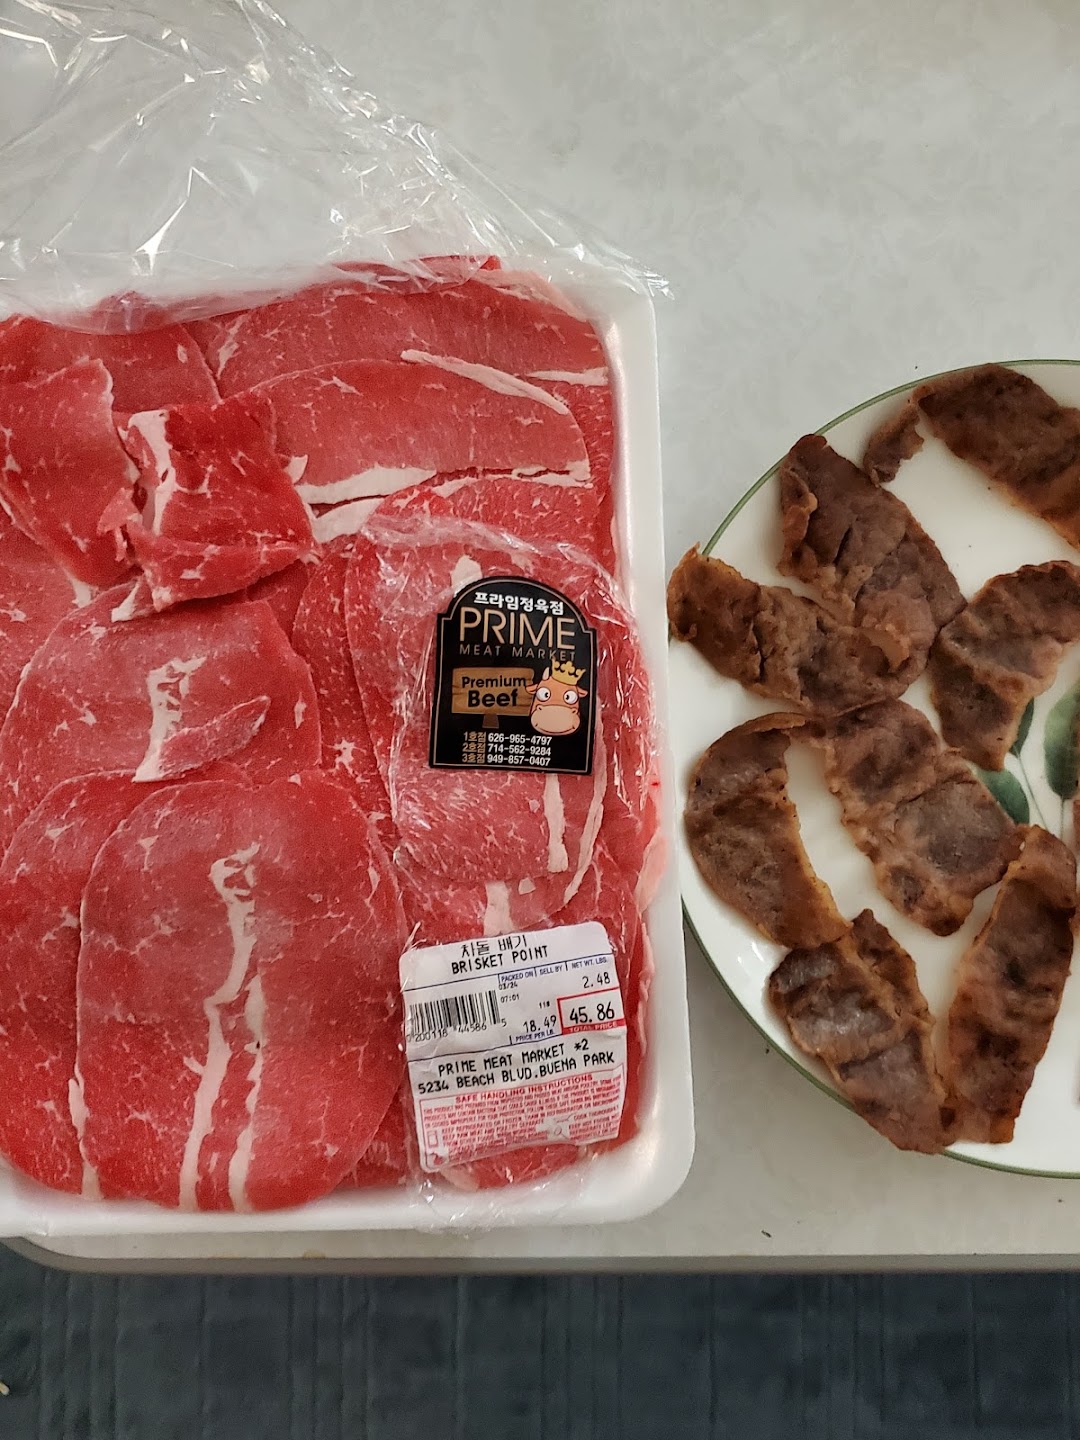 Prime Meat Market